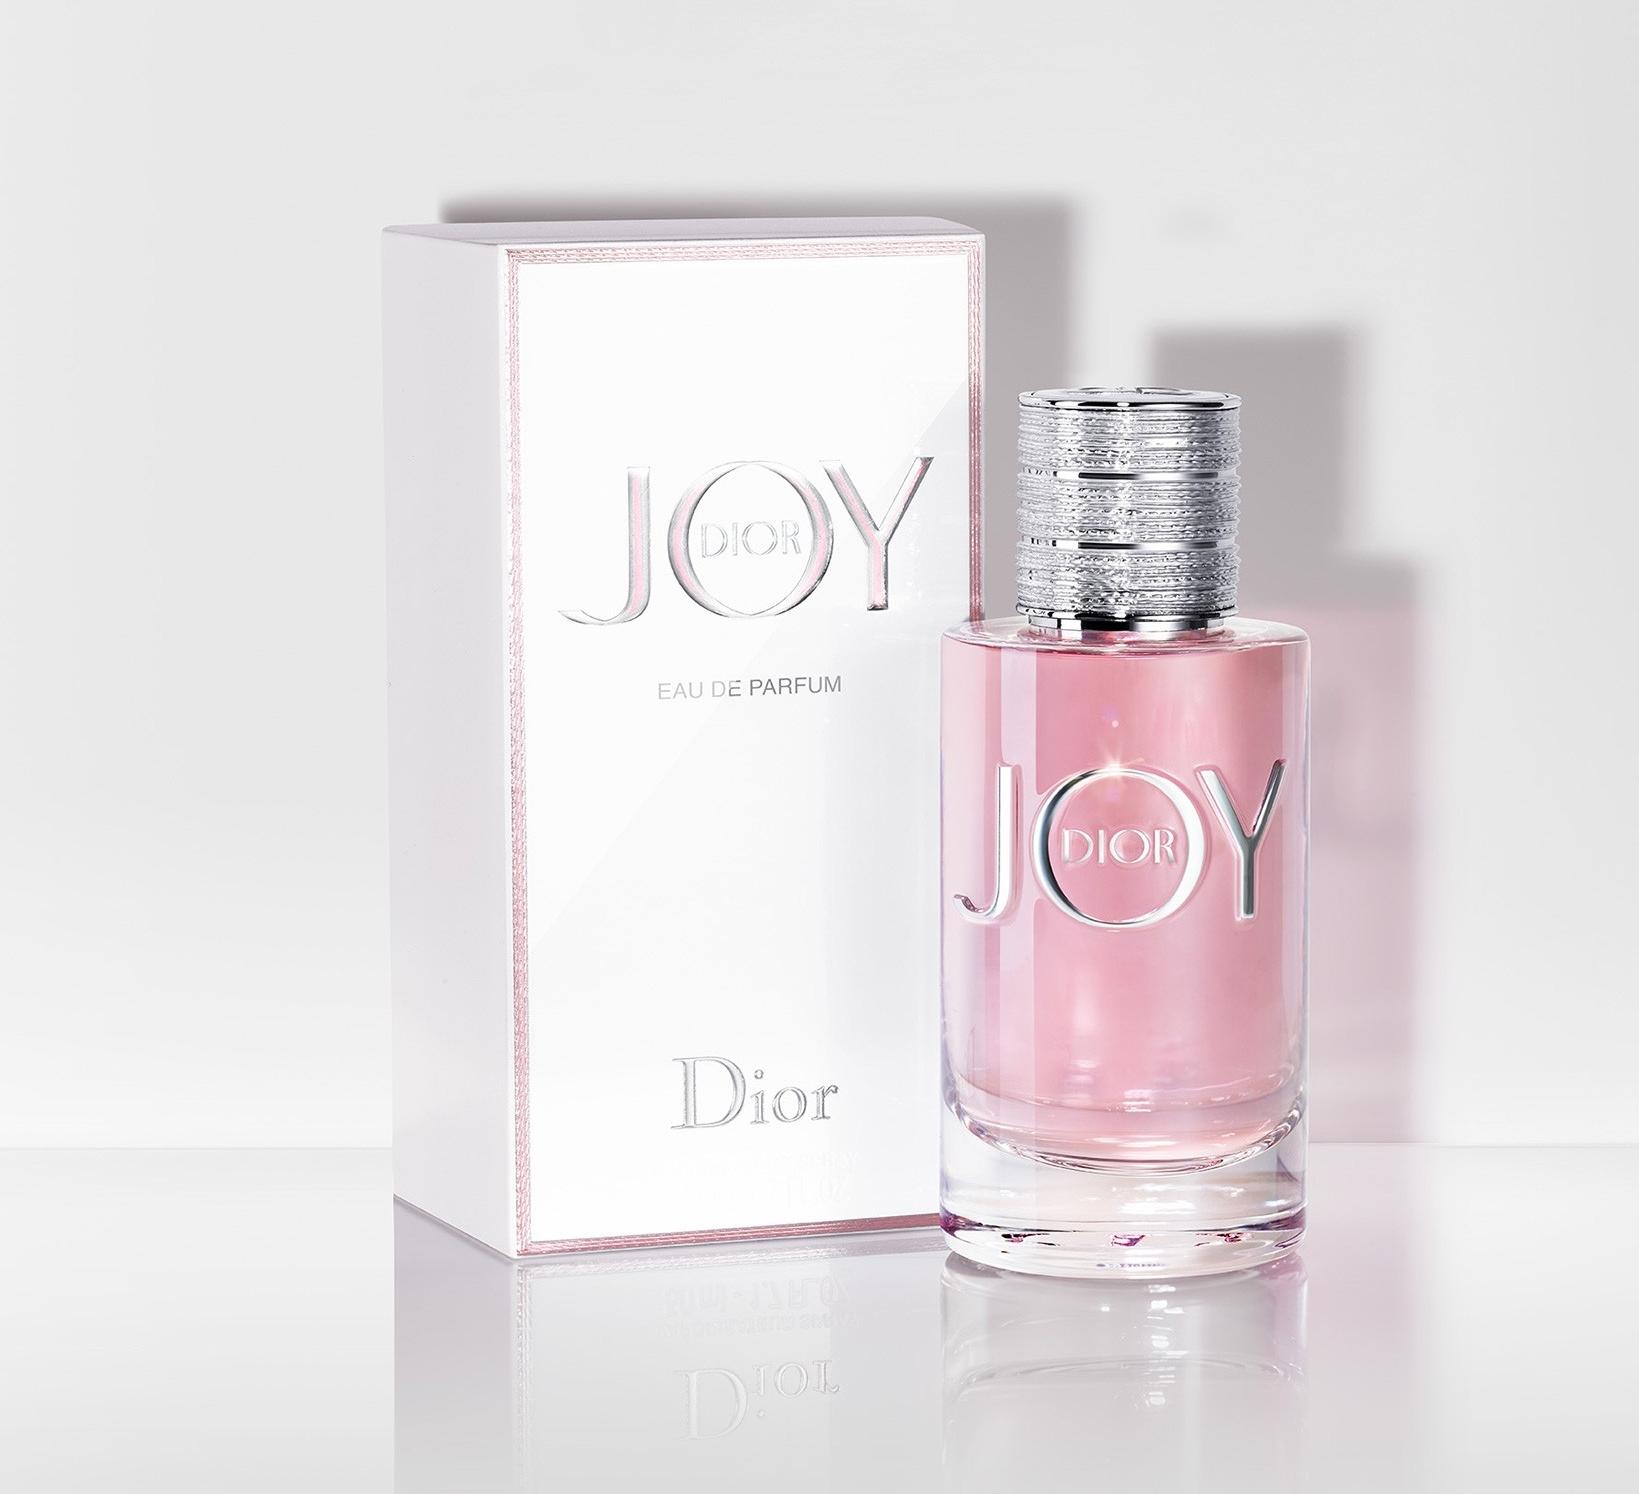 Chi tiết hơn 57 về dior joy smell hay nhất  cdgdbentreeduvn